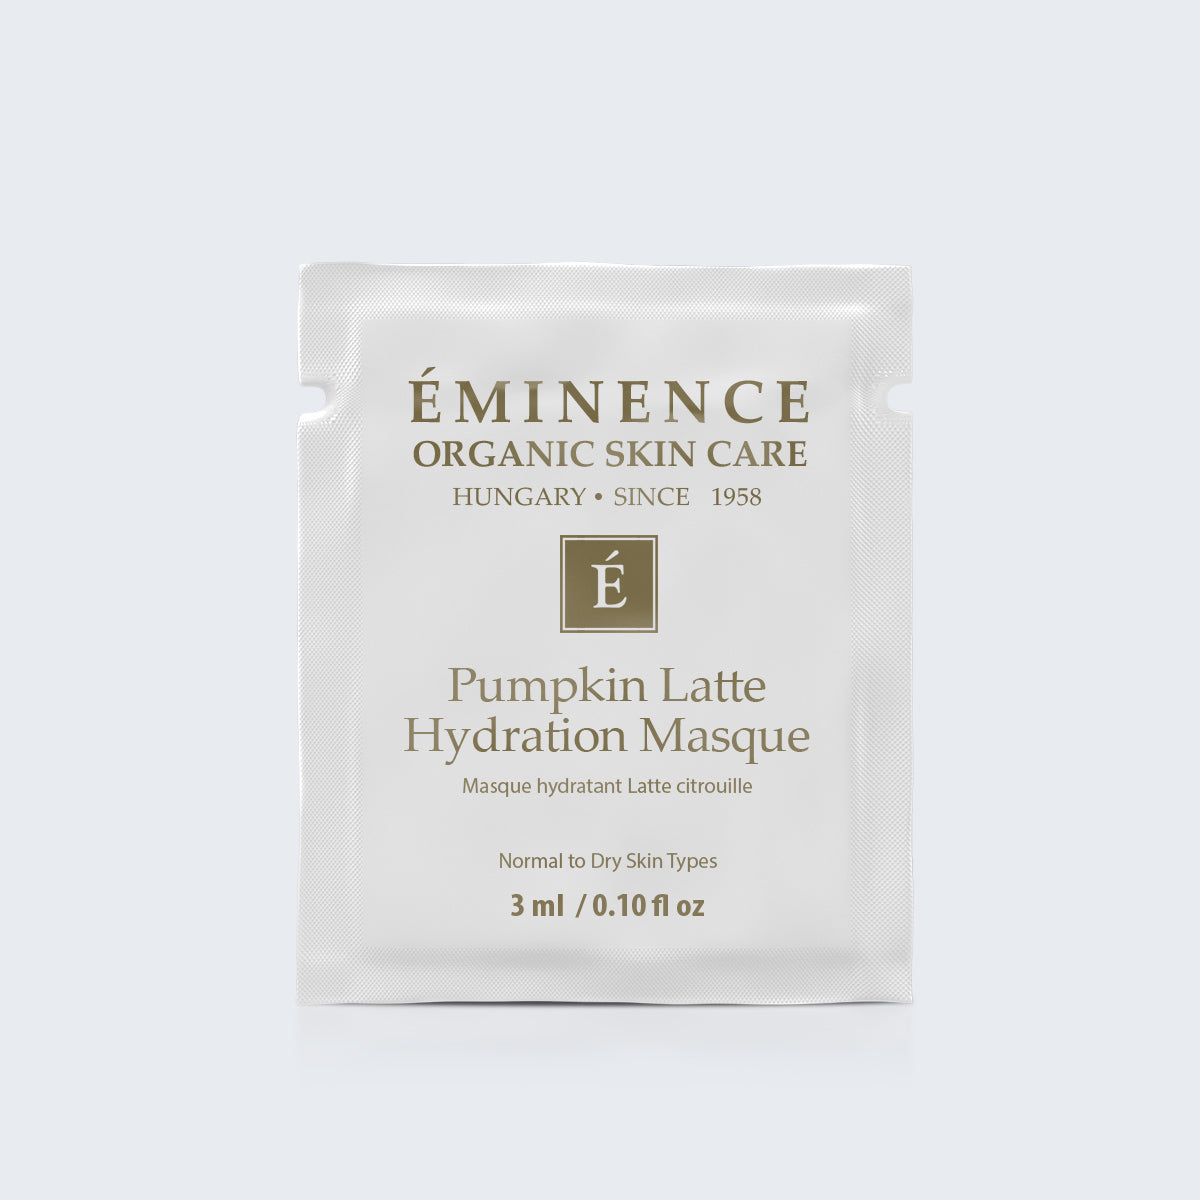 Eminence Organics Pumpkin Latte Hydration Masque Sample